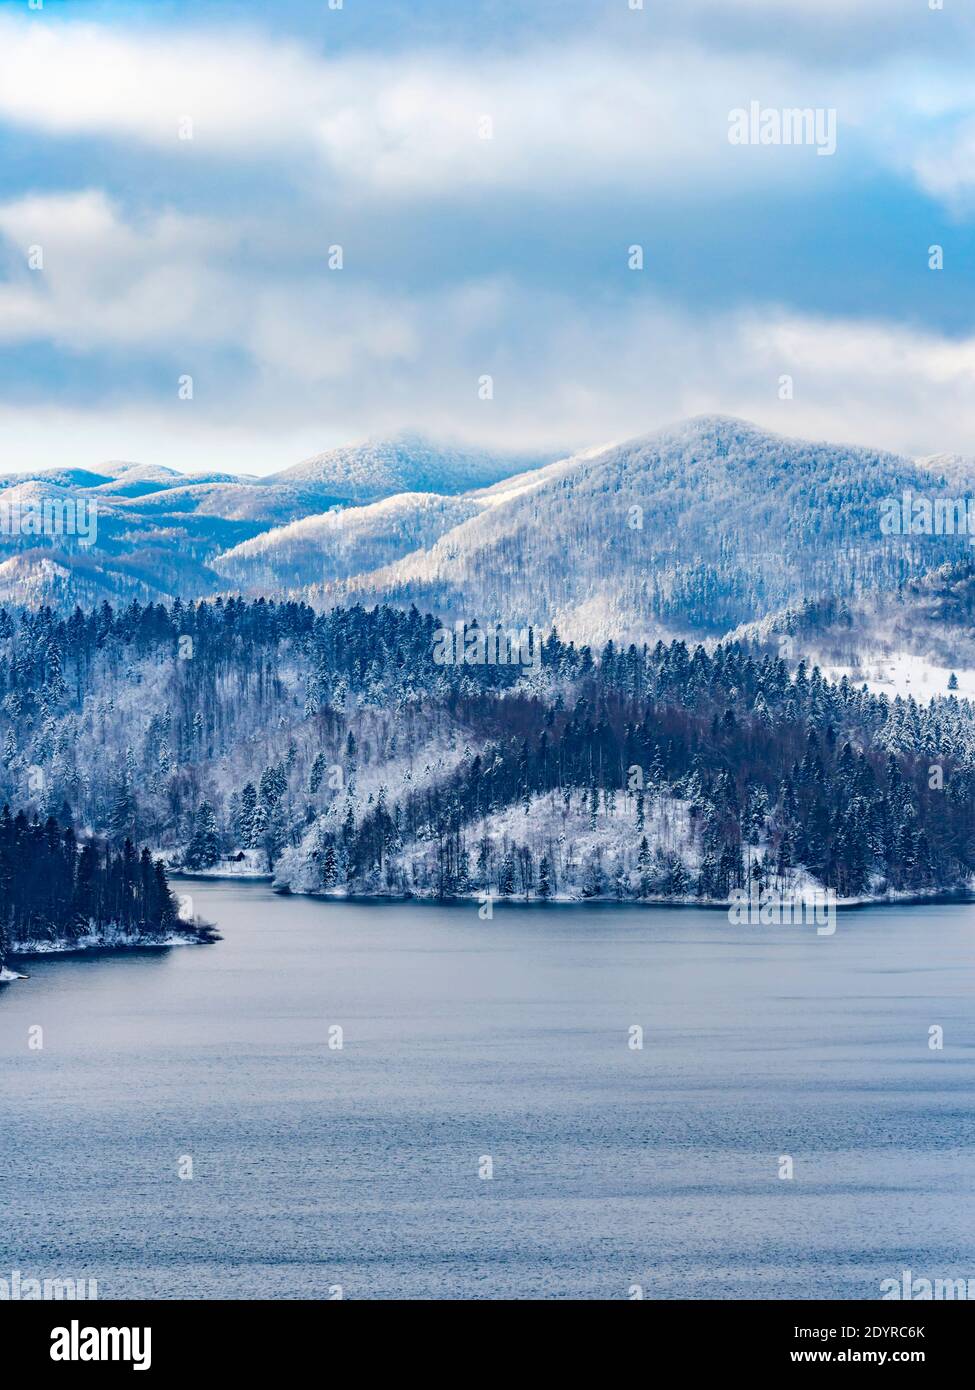 Winter show landscape scenery scenic panorama Stock Photo